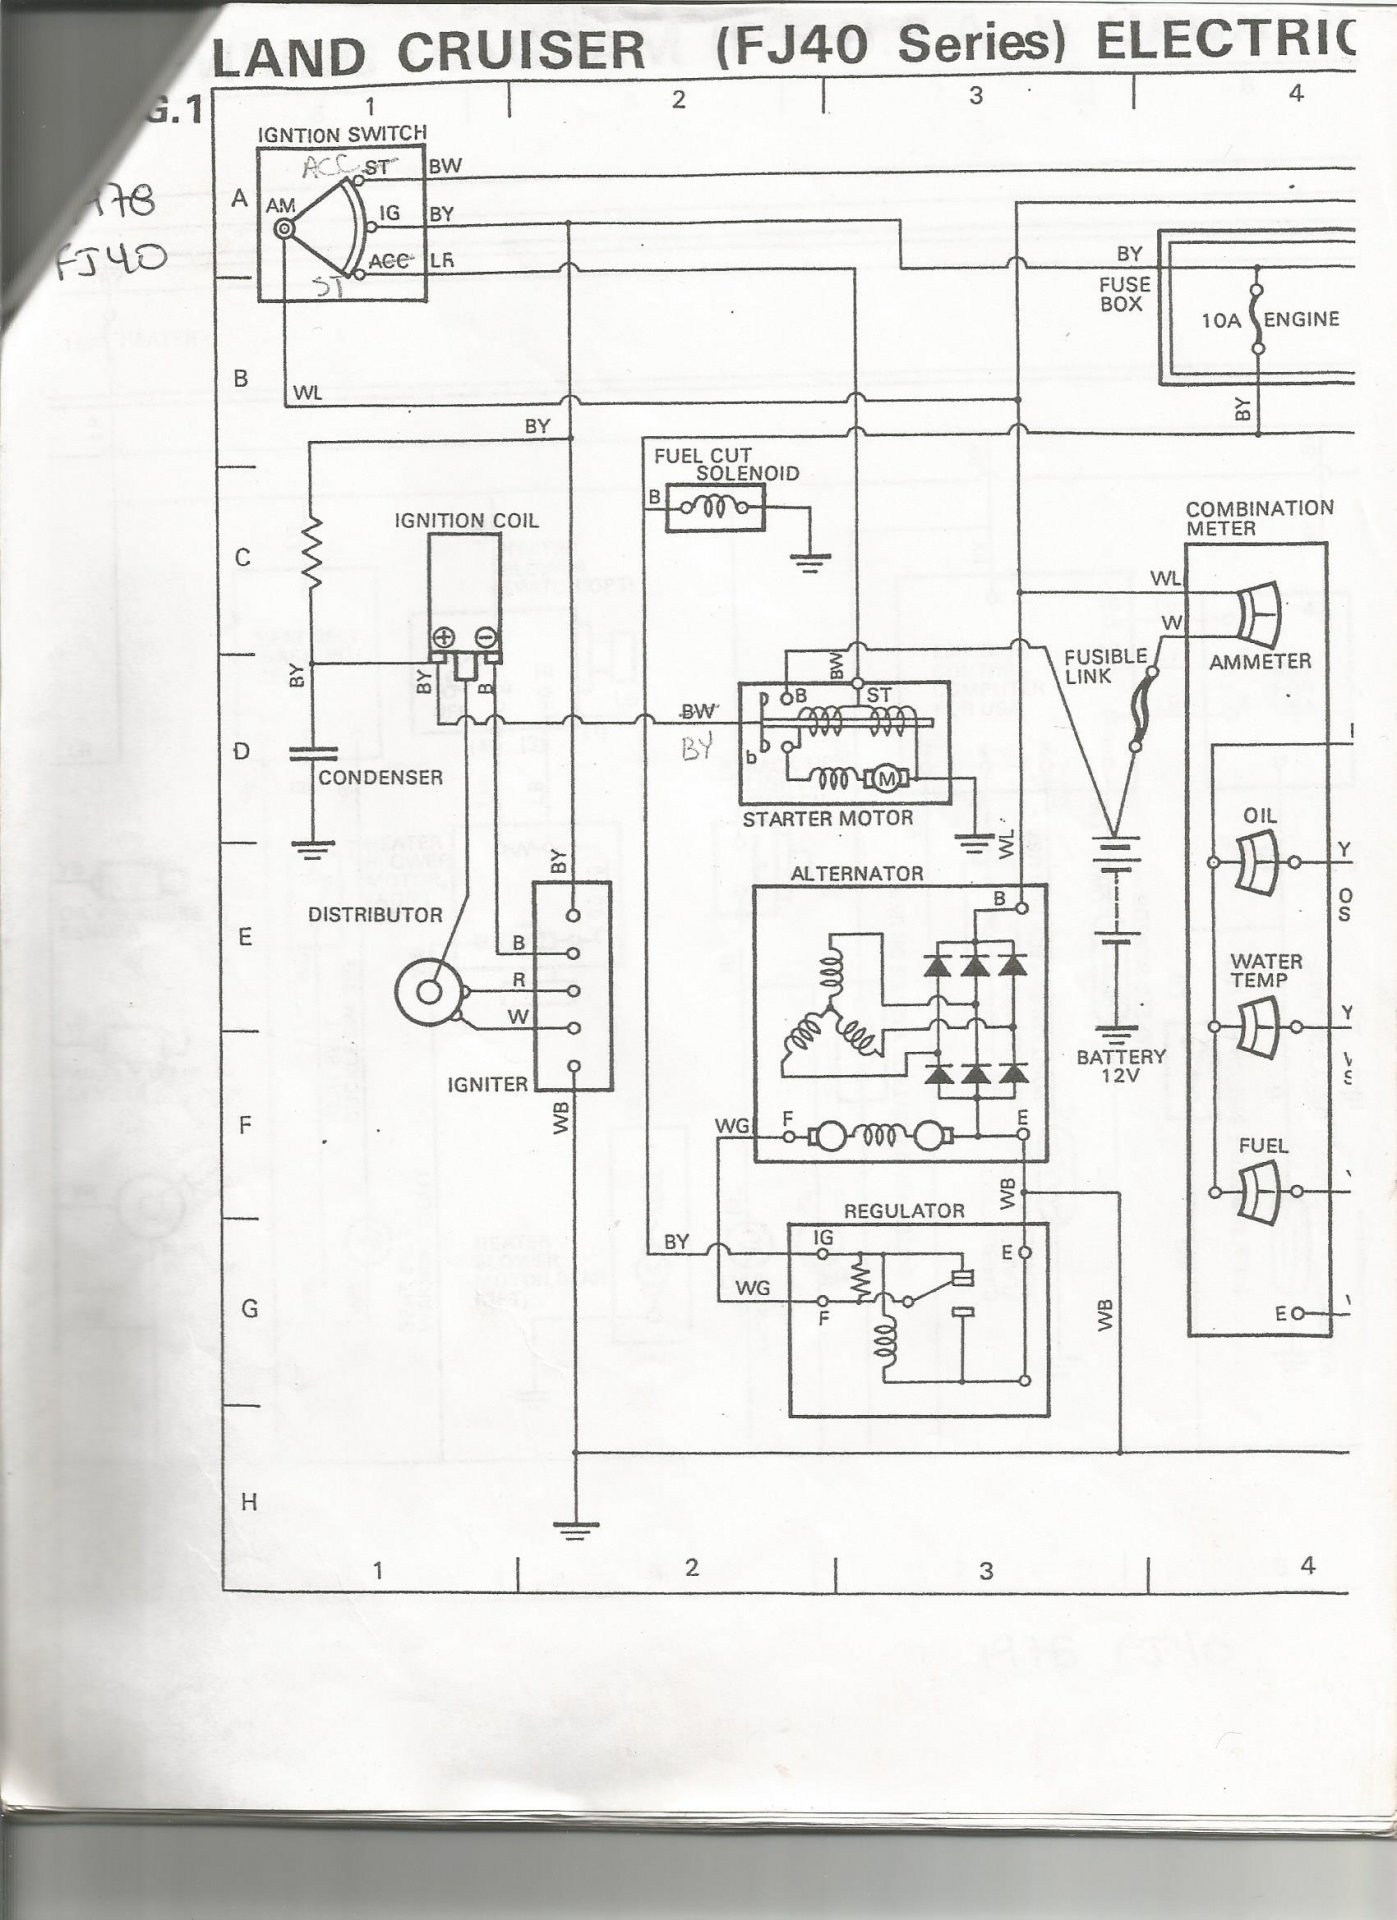 1978 Ignitor Going Back In - fj40 - wiring help | IH8MUD Forum